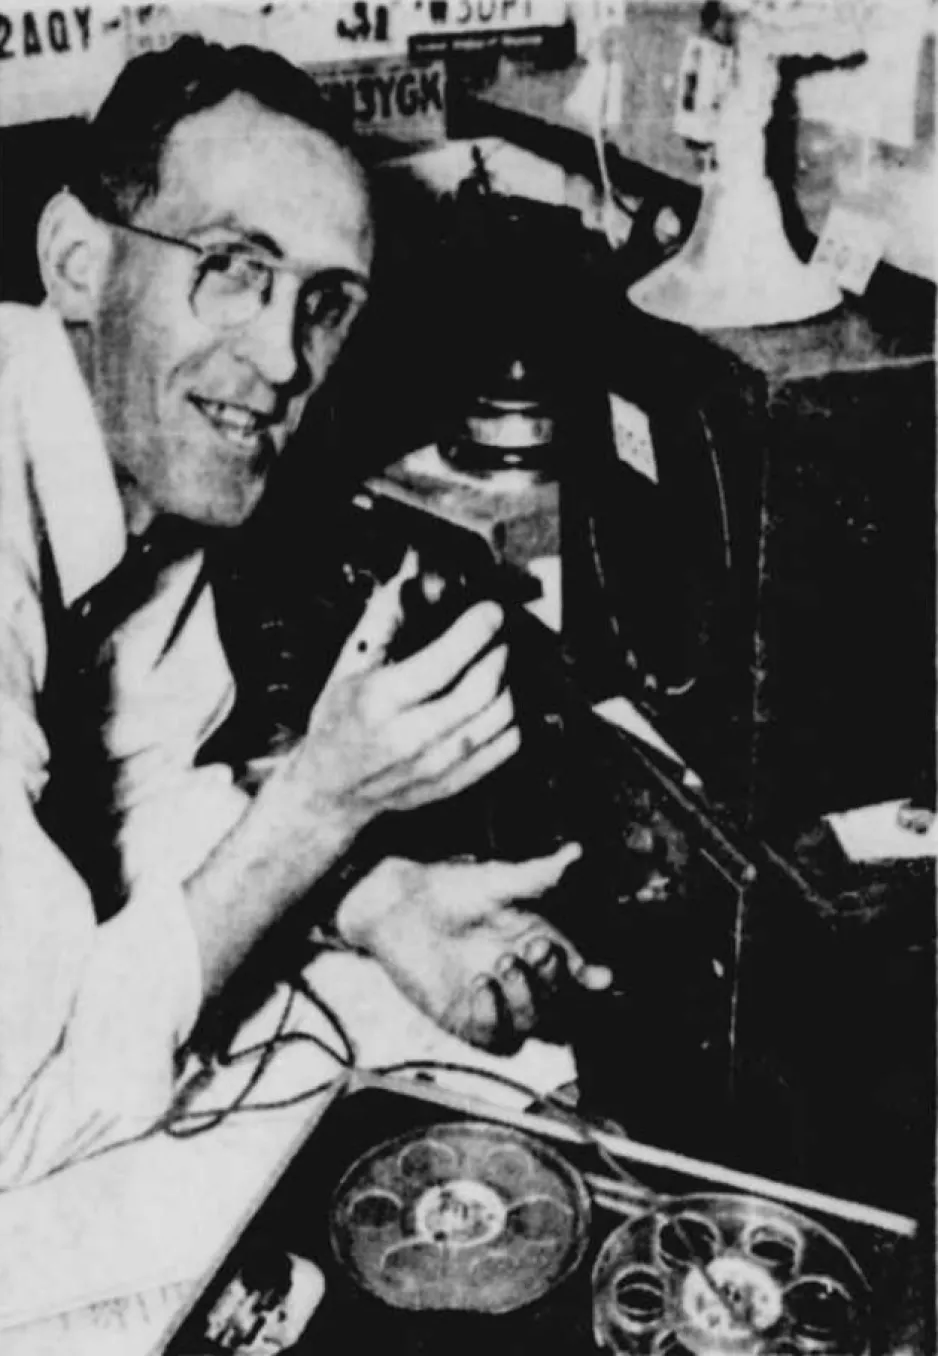 Toronto amateur radio operator Cecil Ludlow. Anon., “–.” Le Nouvelliste, 9 October 1957, 10.